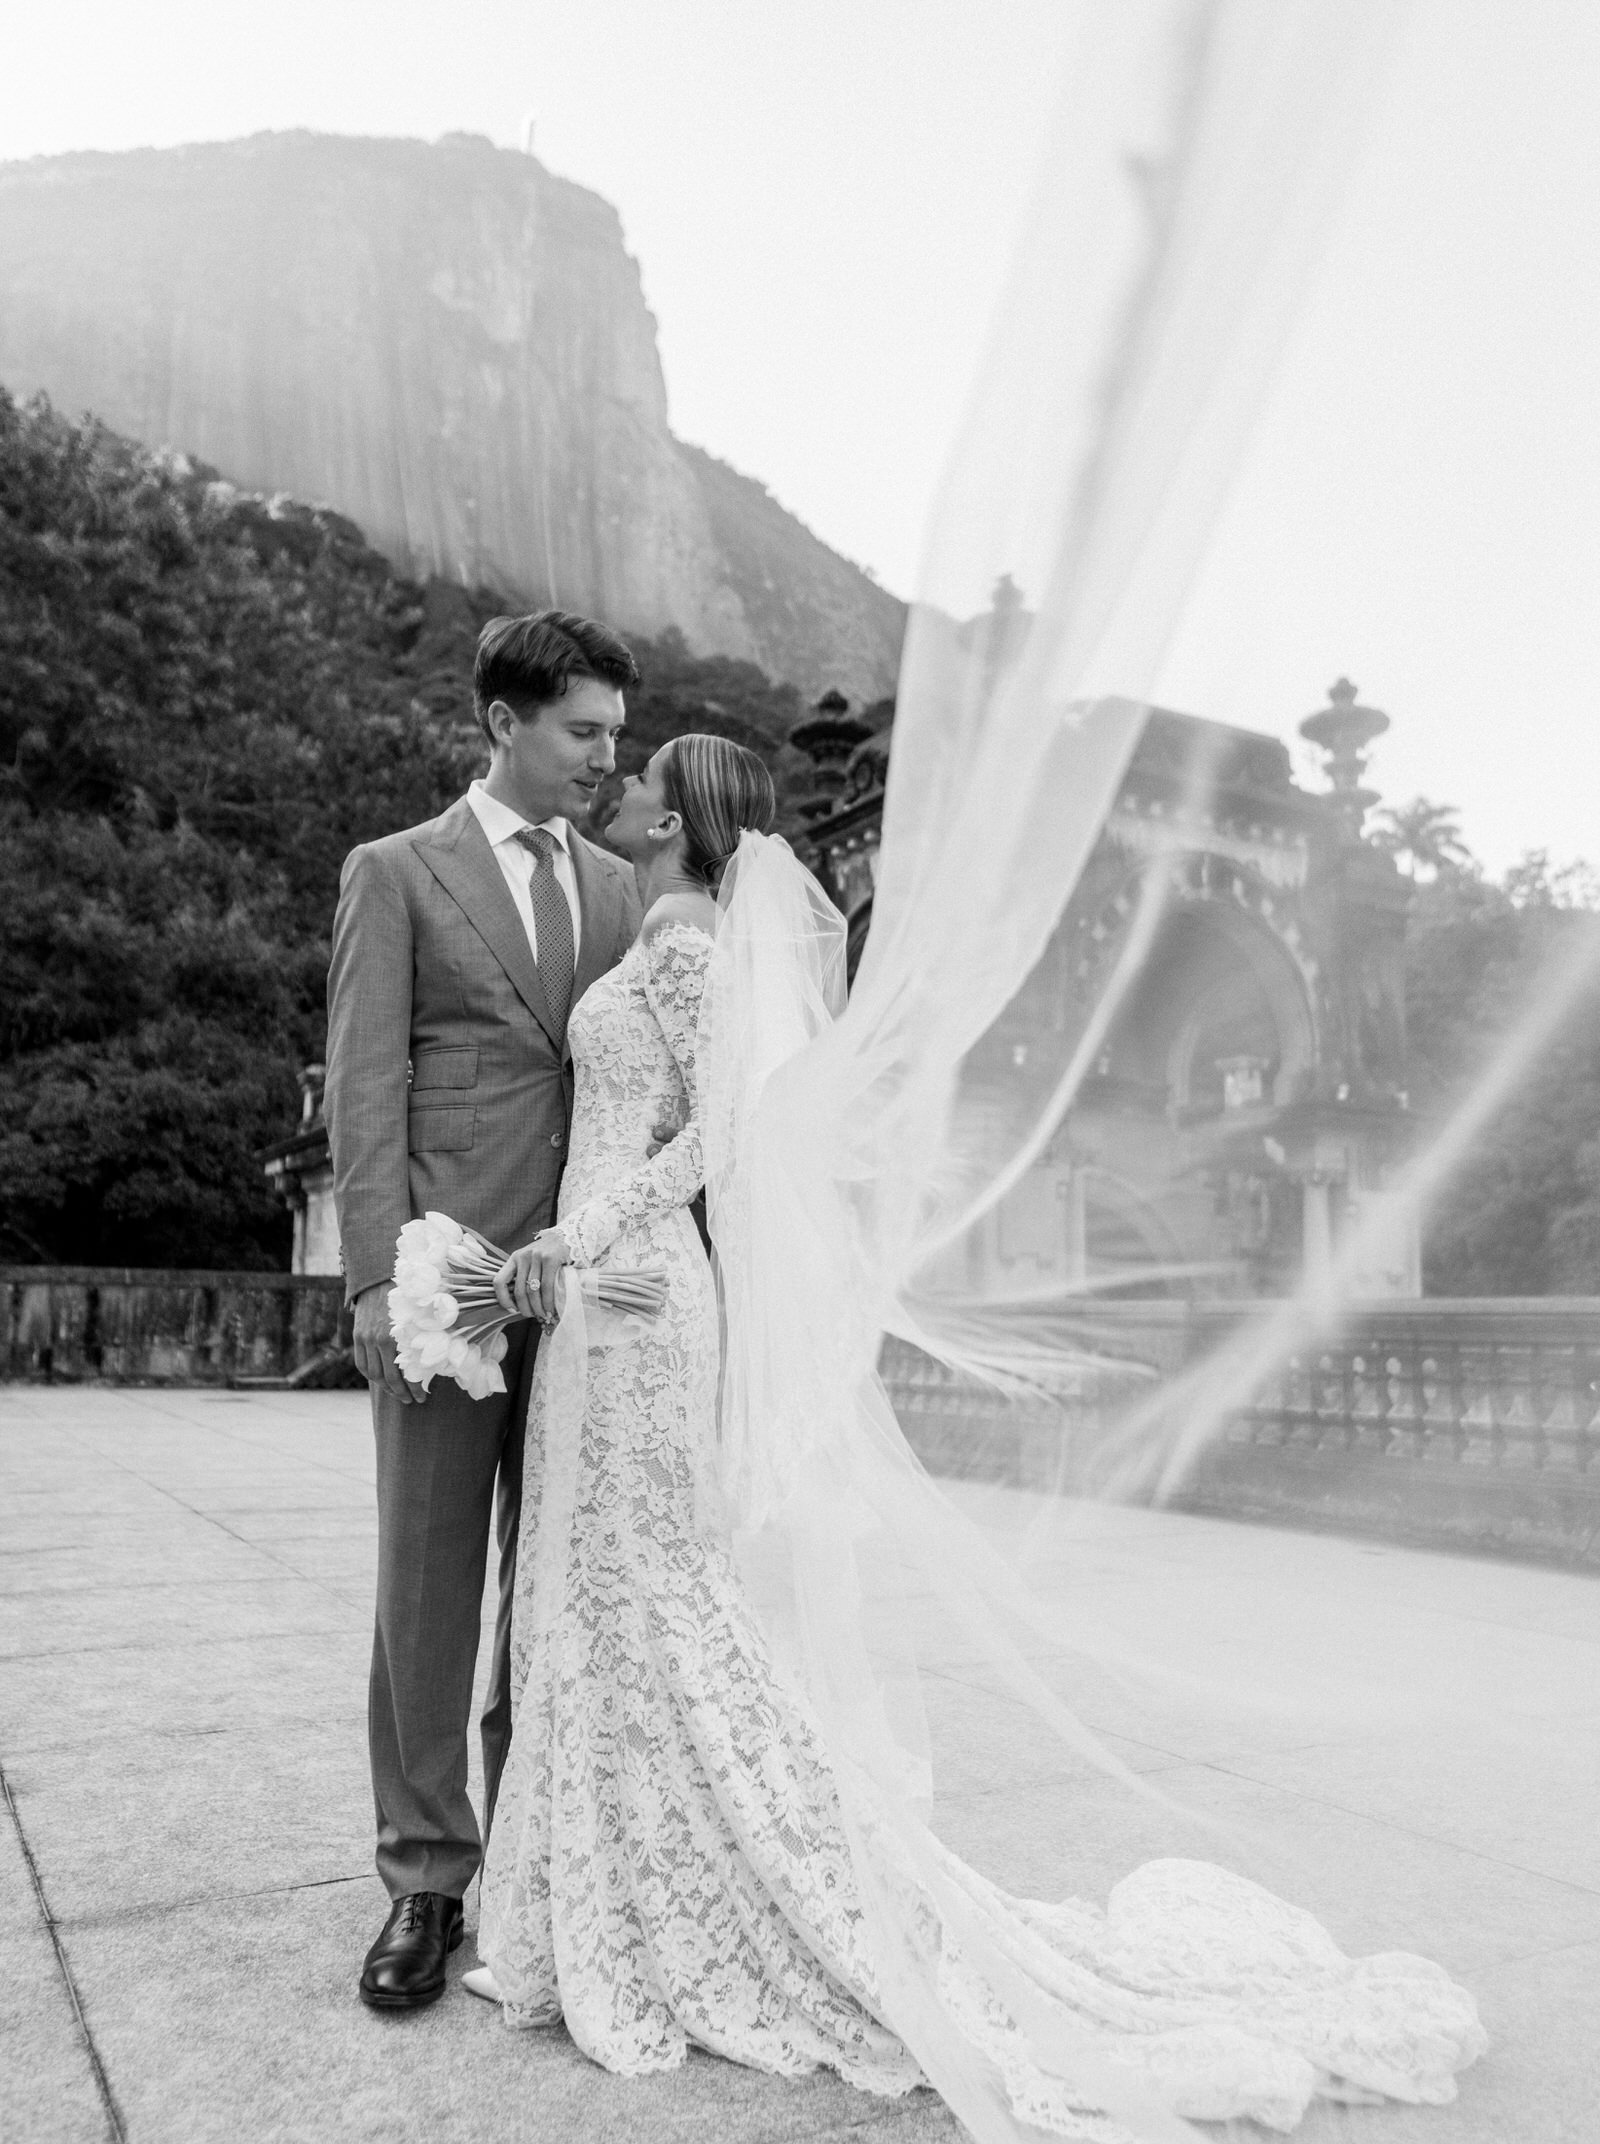 A Breathtaking Brazil Wedding! - DWP Insider